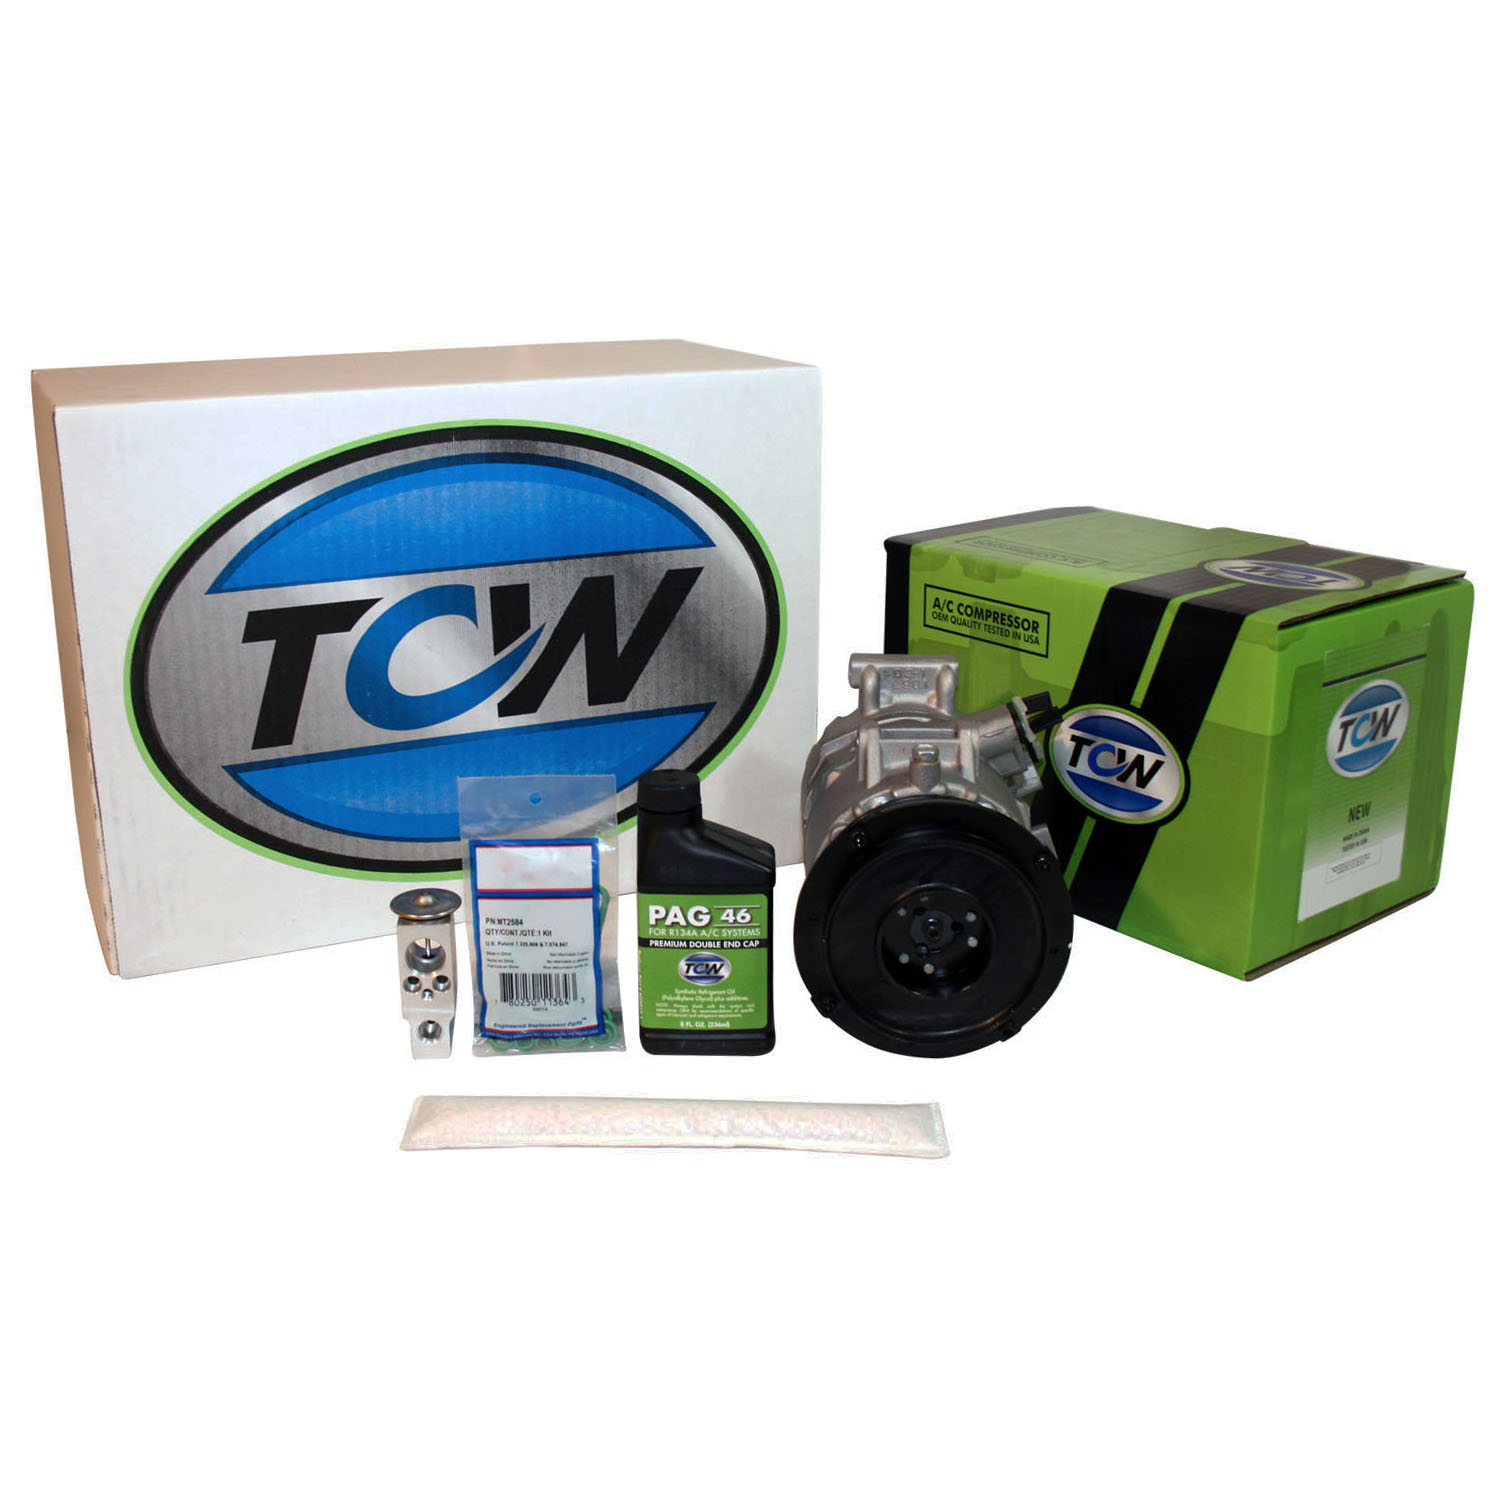 TCW Vehicle A/C Kit K1000406N New Product Image field_60b6a13a6e67c